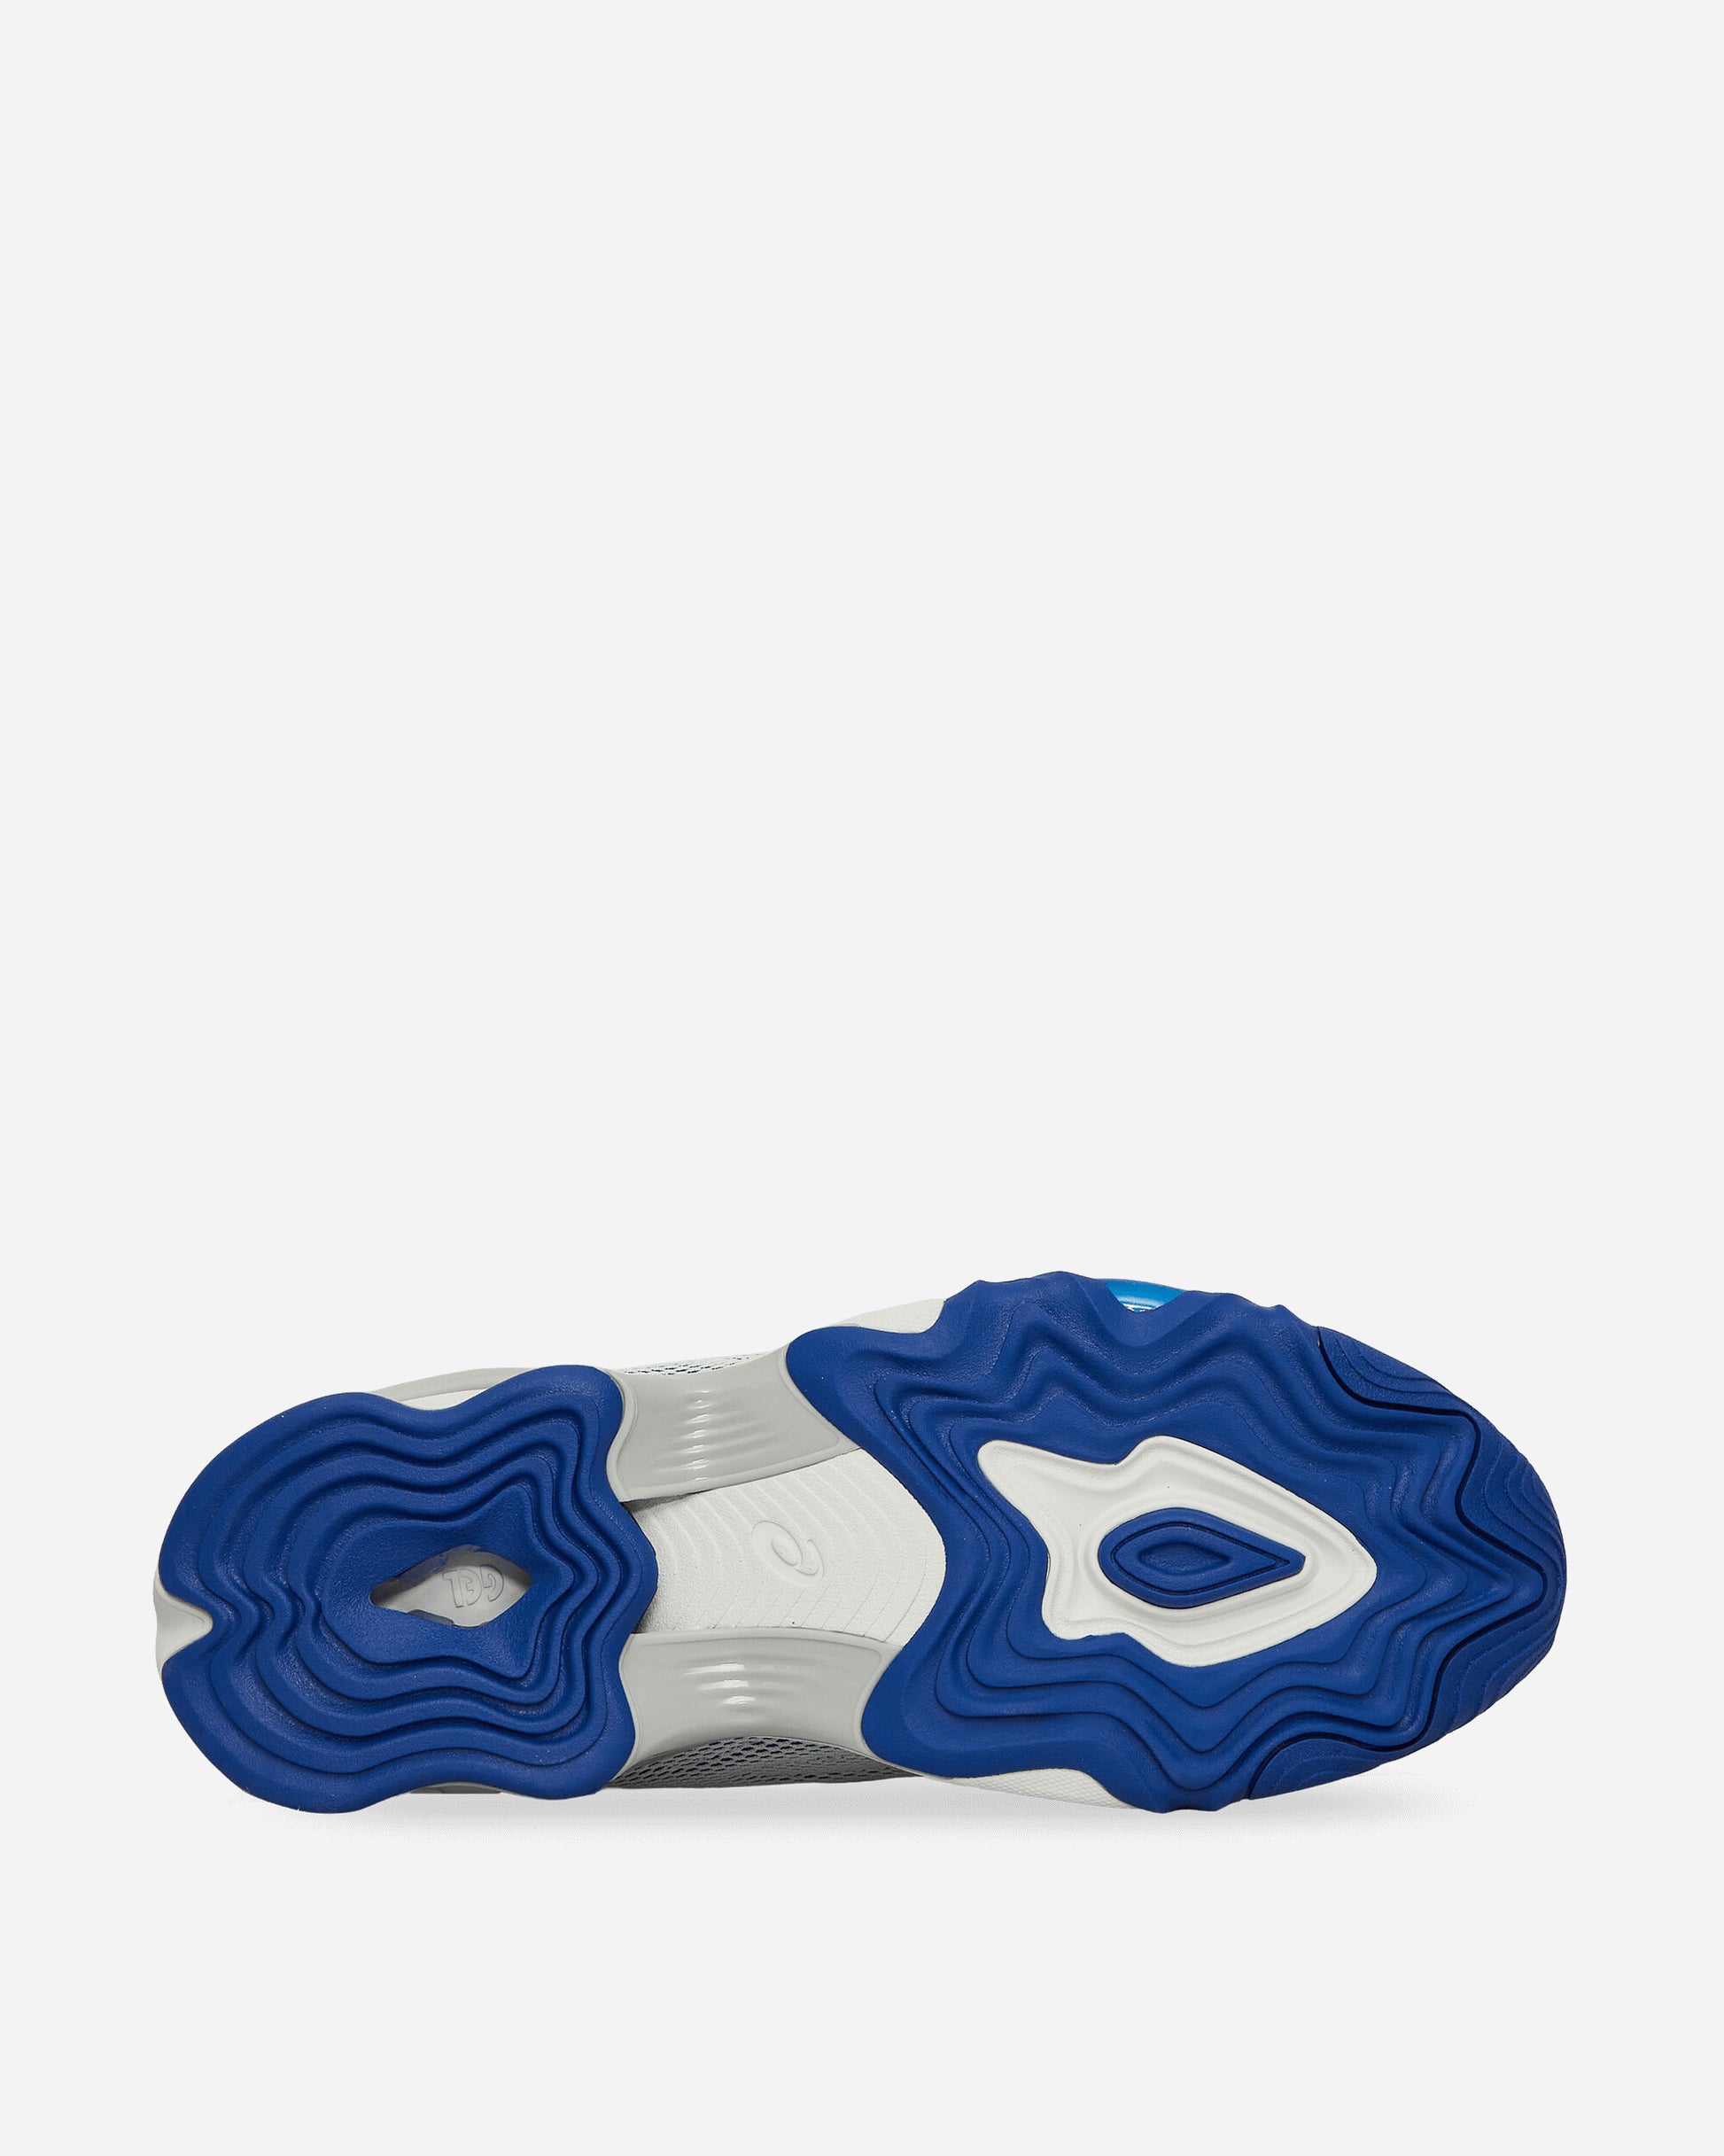 Asics Gel-Teremoa Snow White/Asics Blue Sneakers Low 1203A501-100